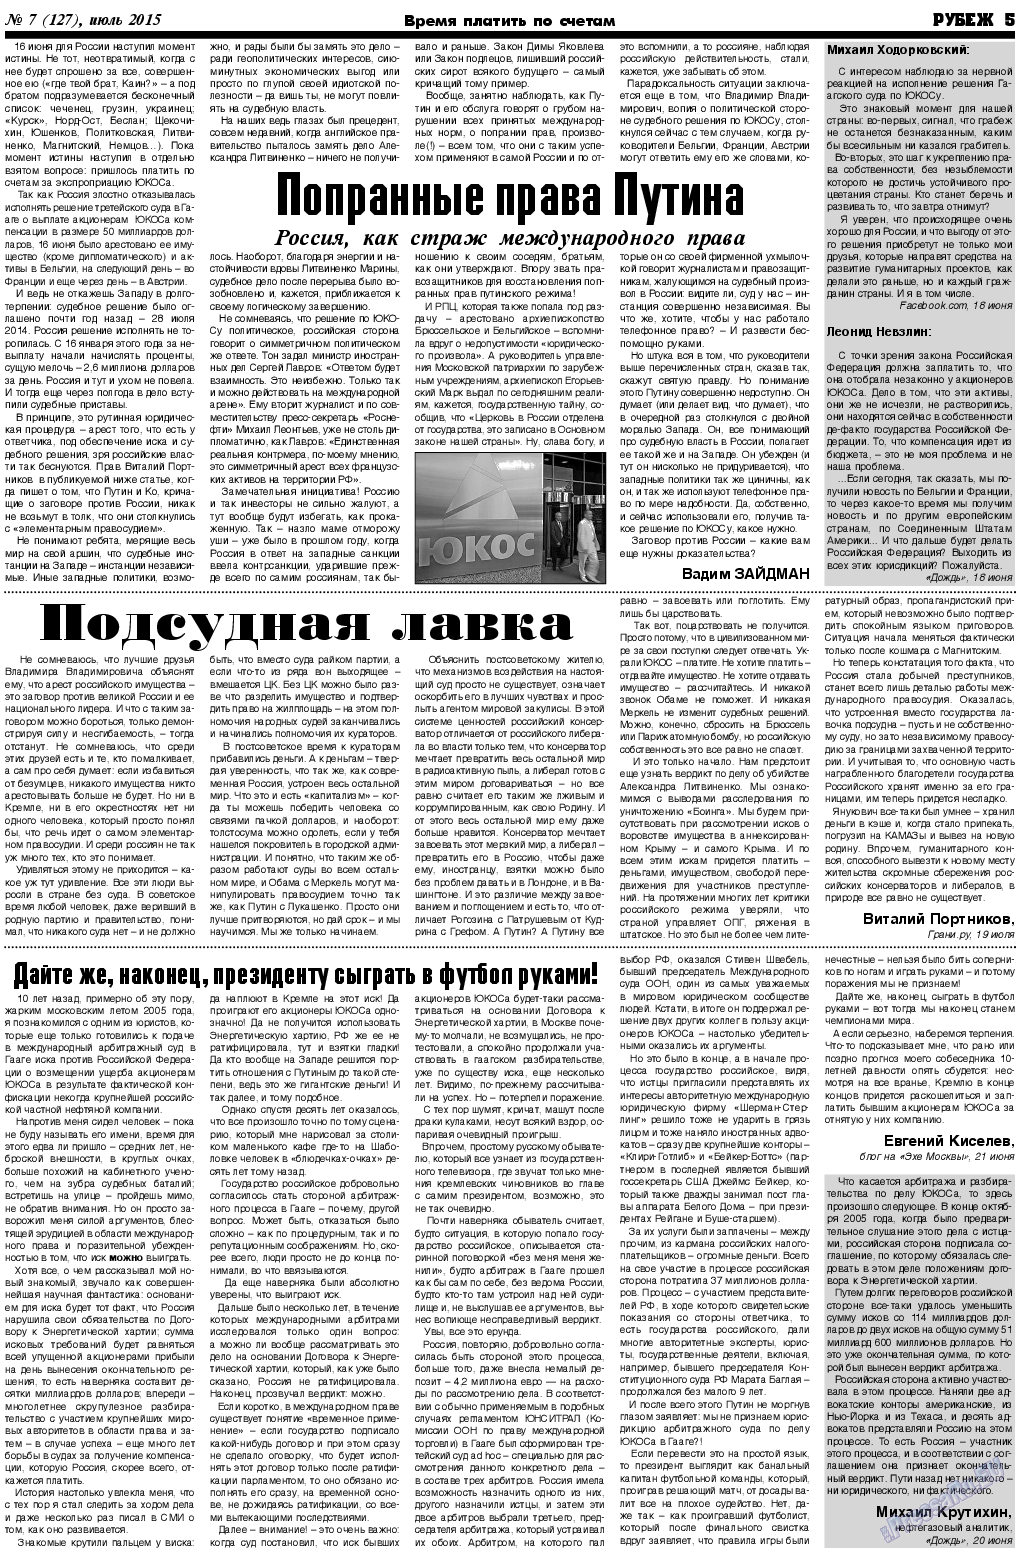 Рубеж, газета. 2015 №7 стр.5